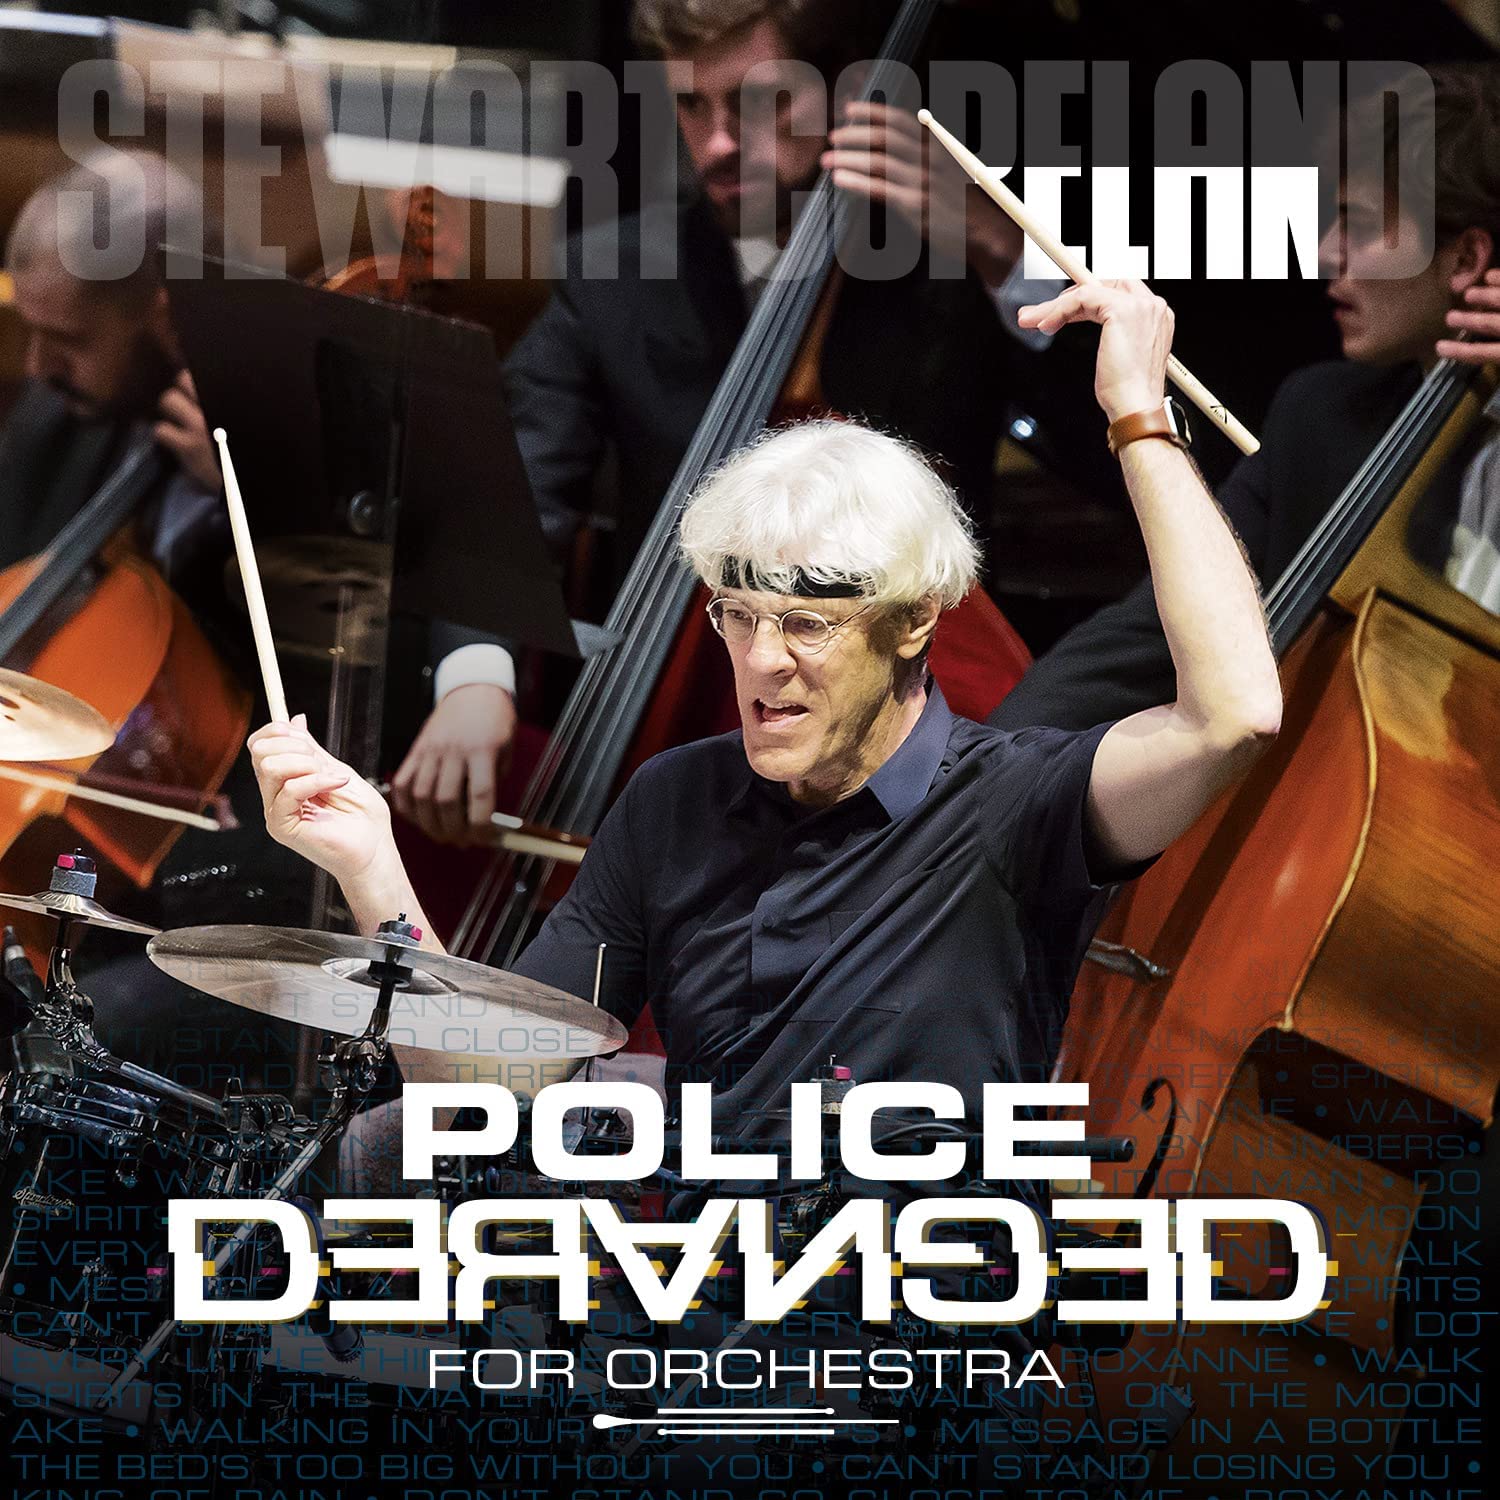 Stewart Copeland: The Police Deranged For Orchestra vinyl LP and CD